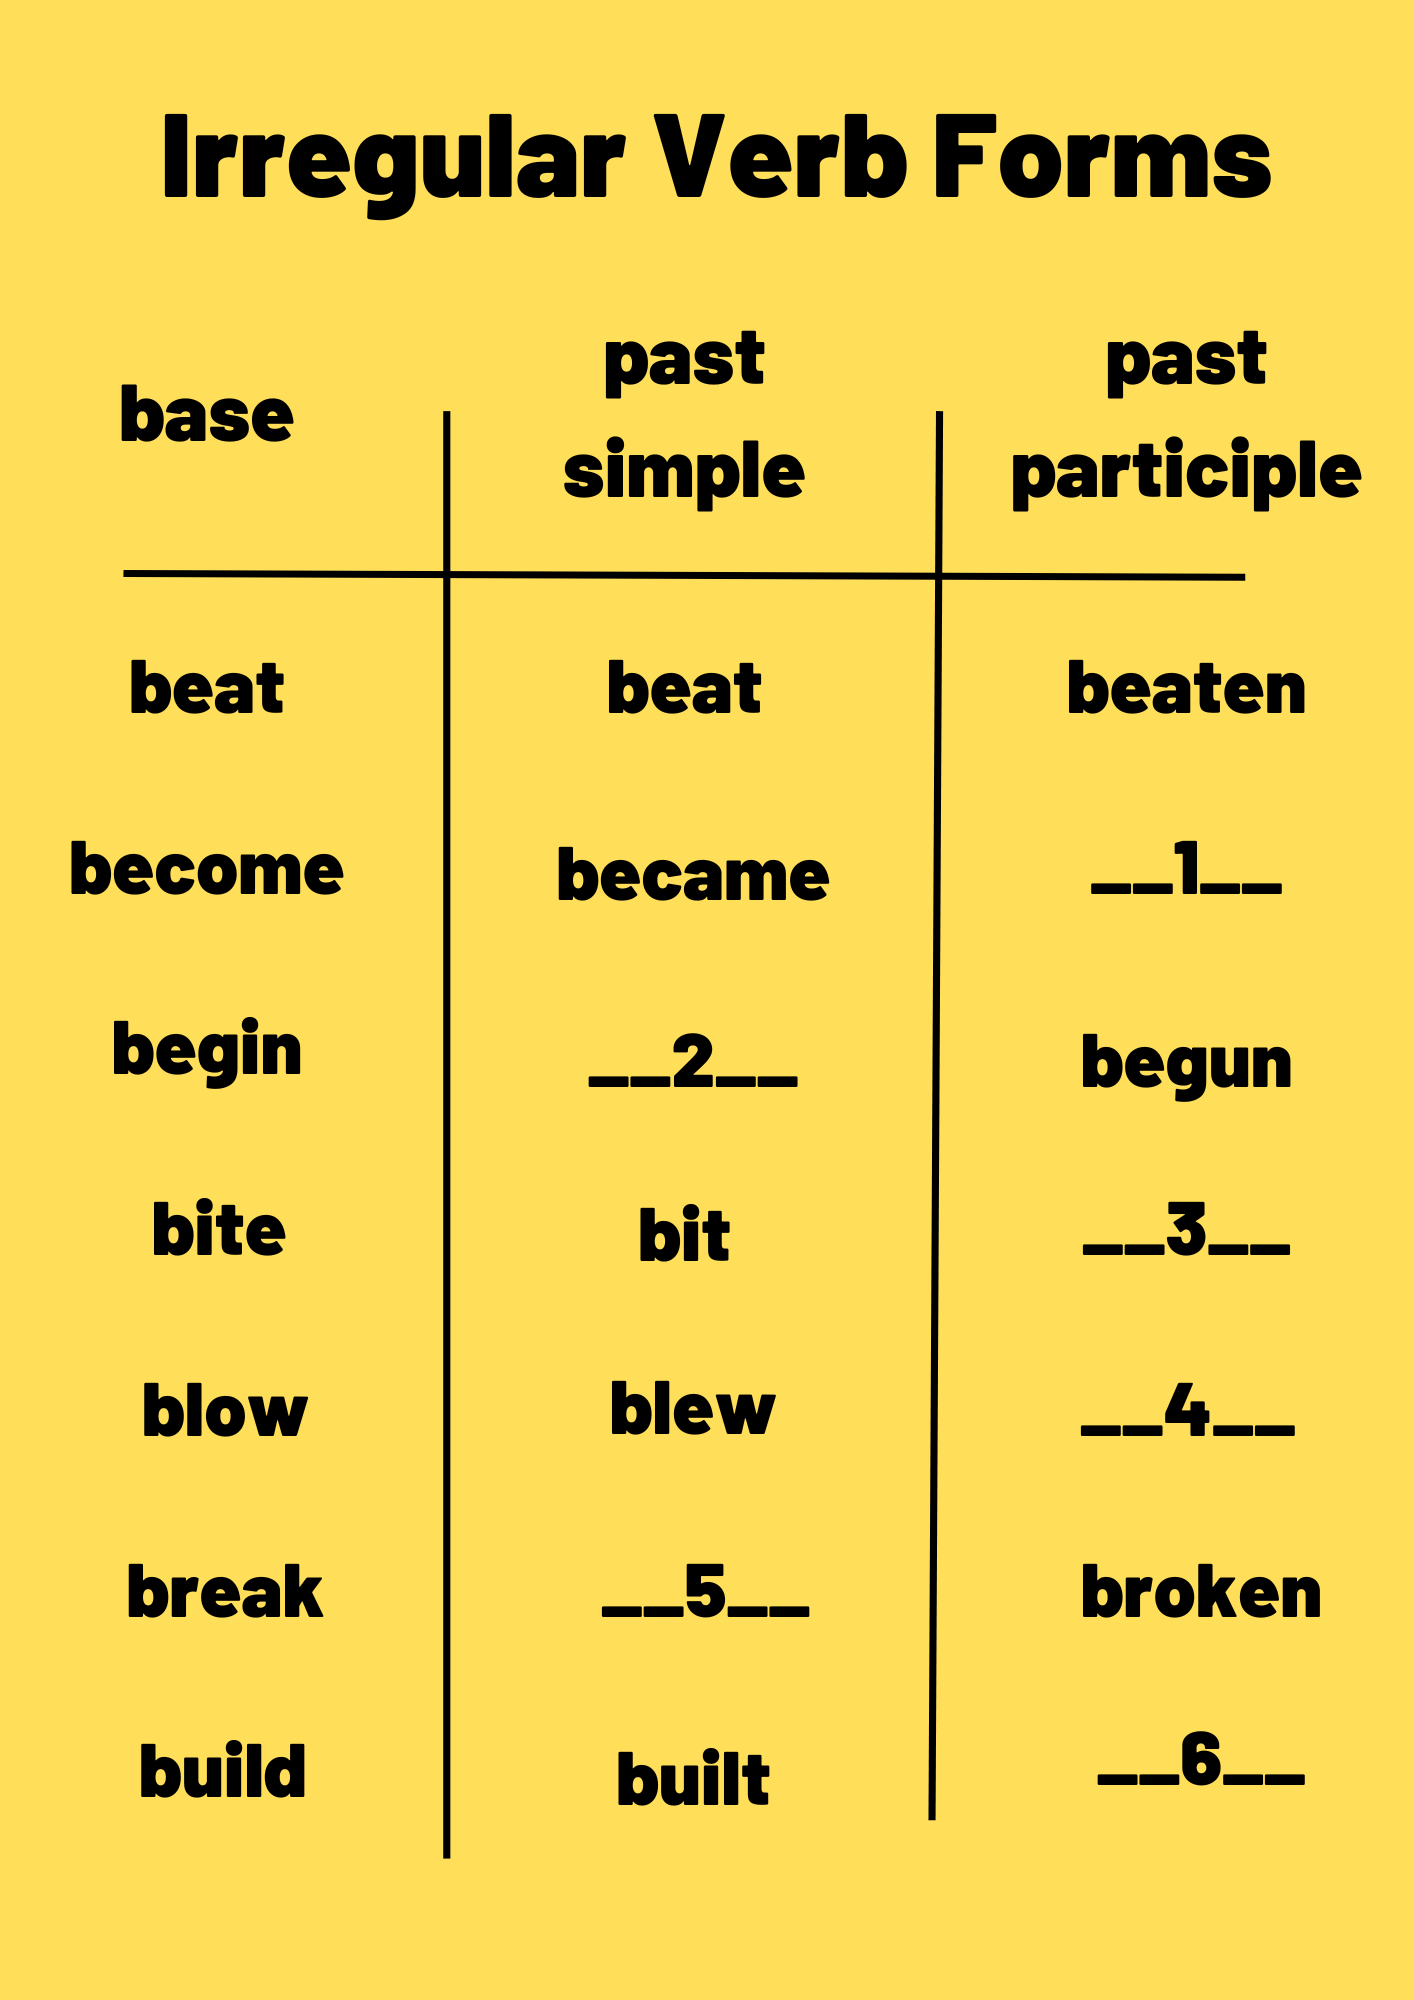 irregular past tense verb list primary grades - Google Search | Irregular  verbs, Verb worksheets, Irregular past tense verbs